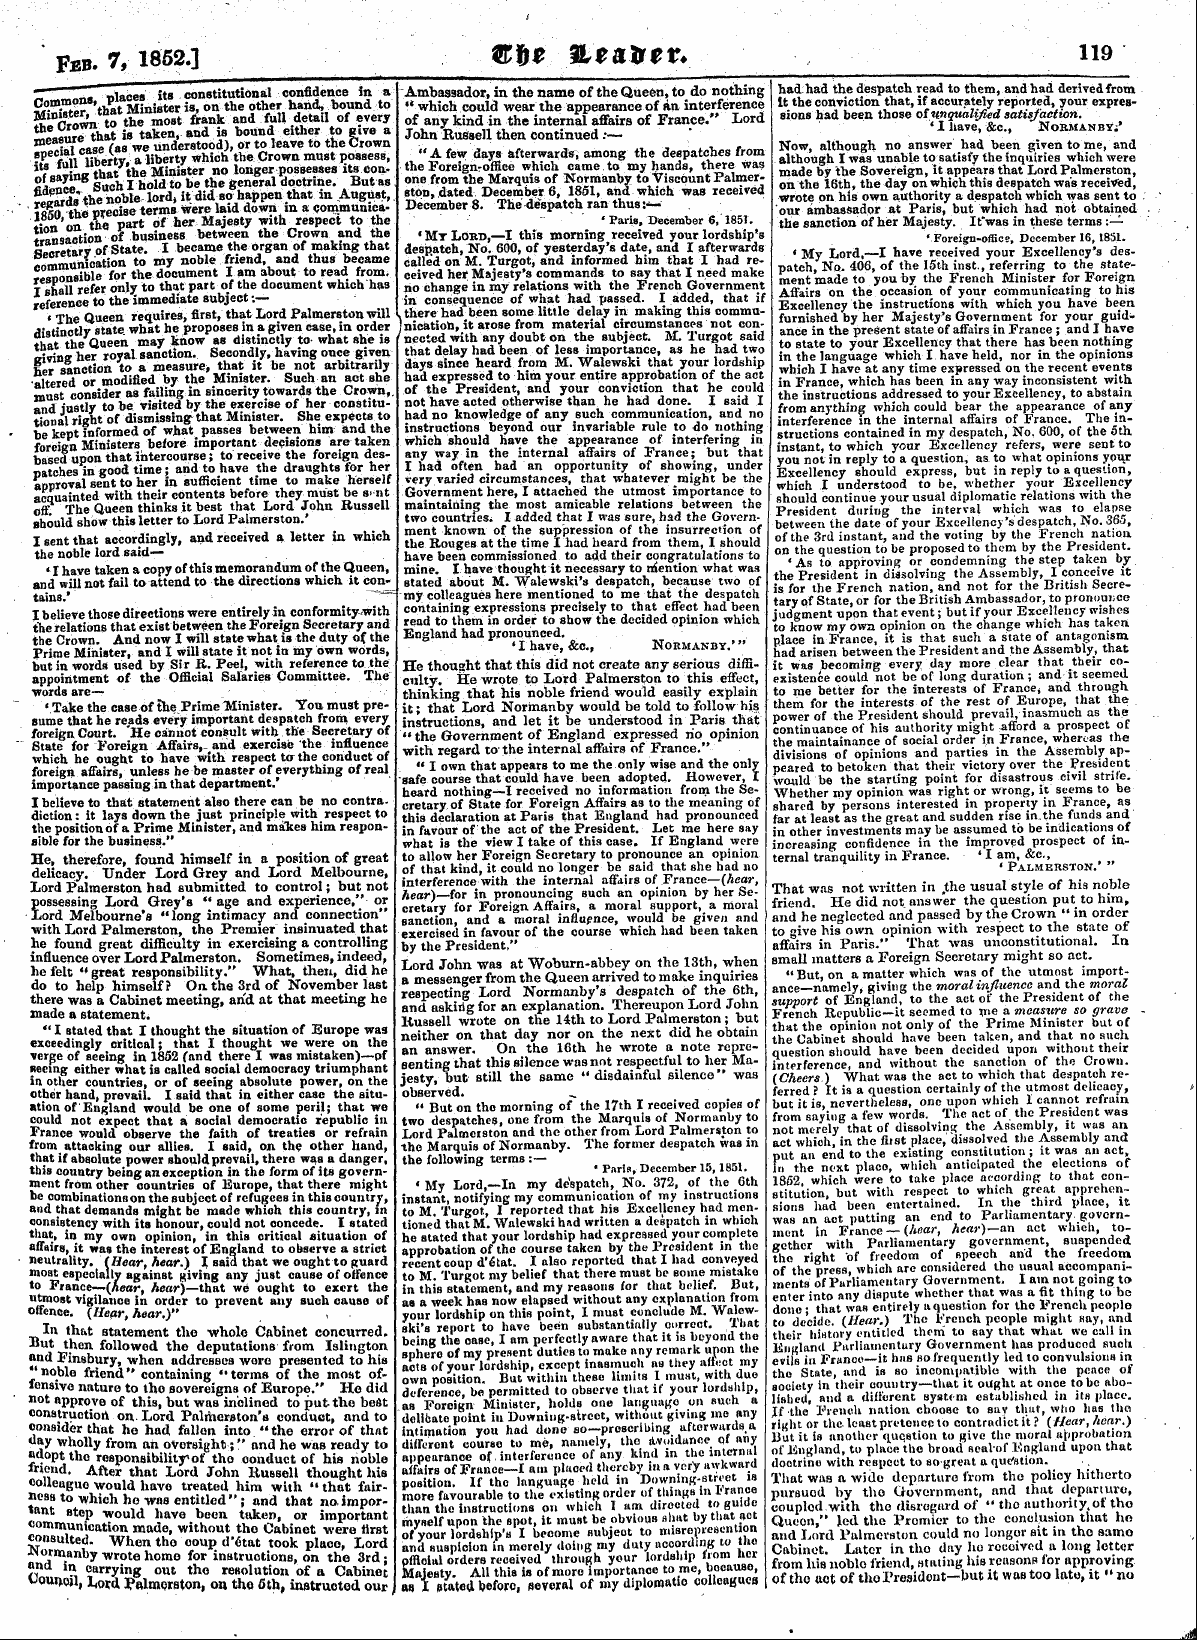 Leader (1850-1860): jS F Y, Country edition - Feb. 1, 1852.] Cfrl? %T*Xtt. 119